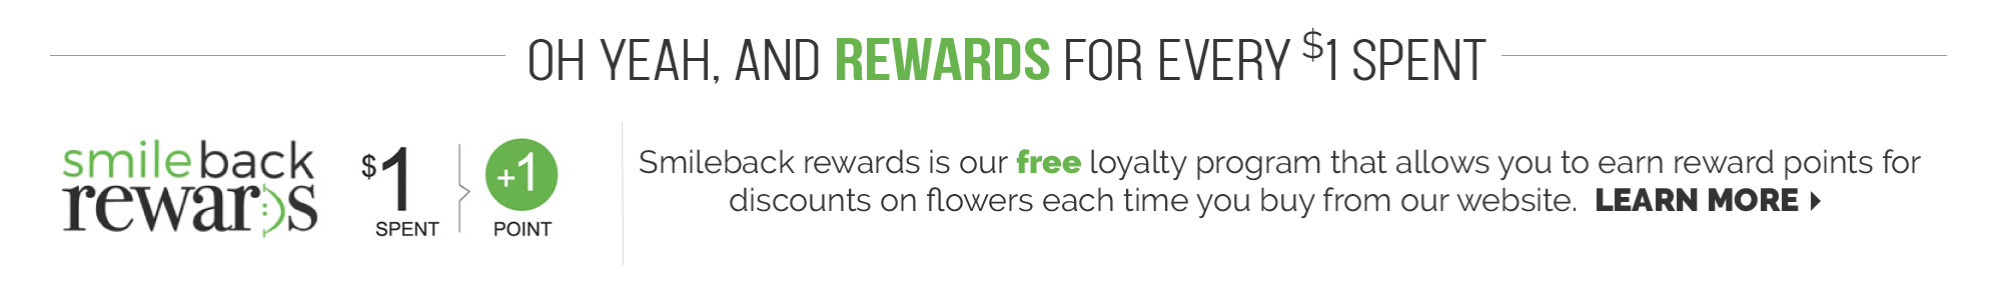 Flowerama Smileback Rewards Program, Earn 1 point for every $1 spent